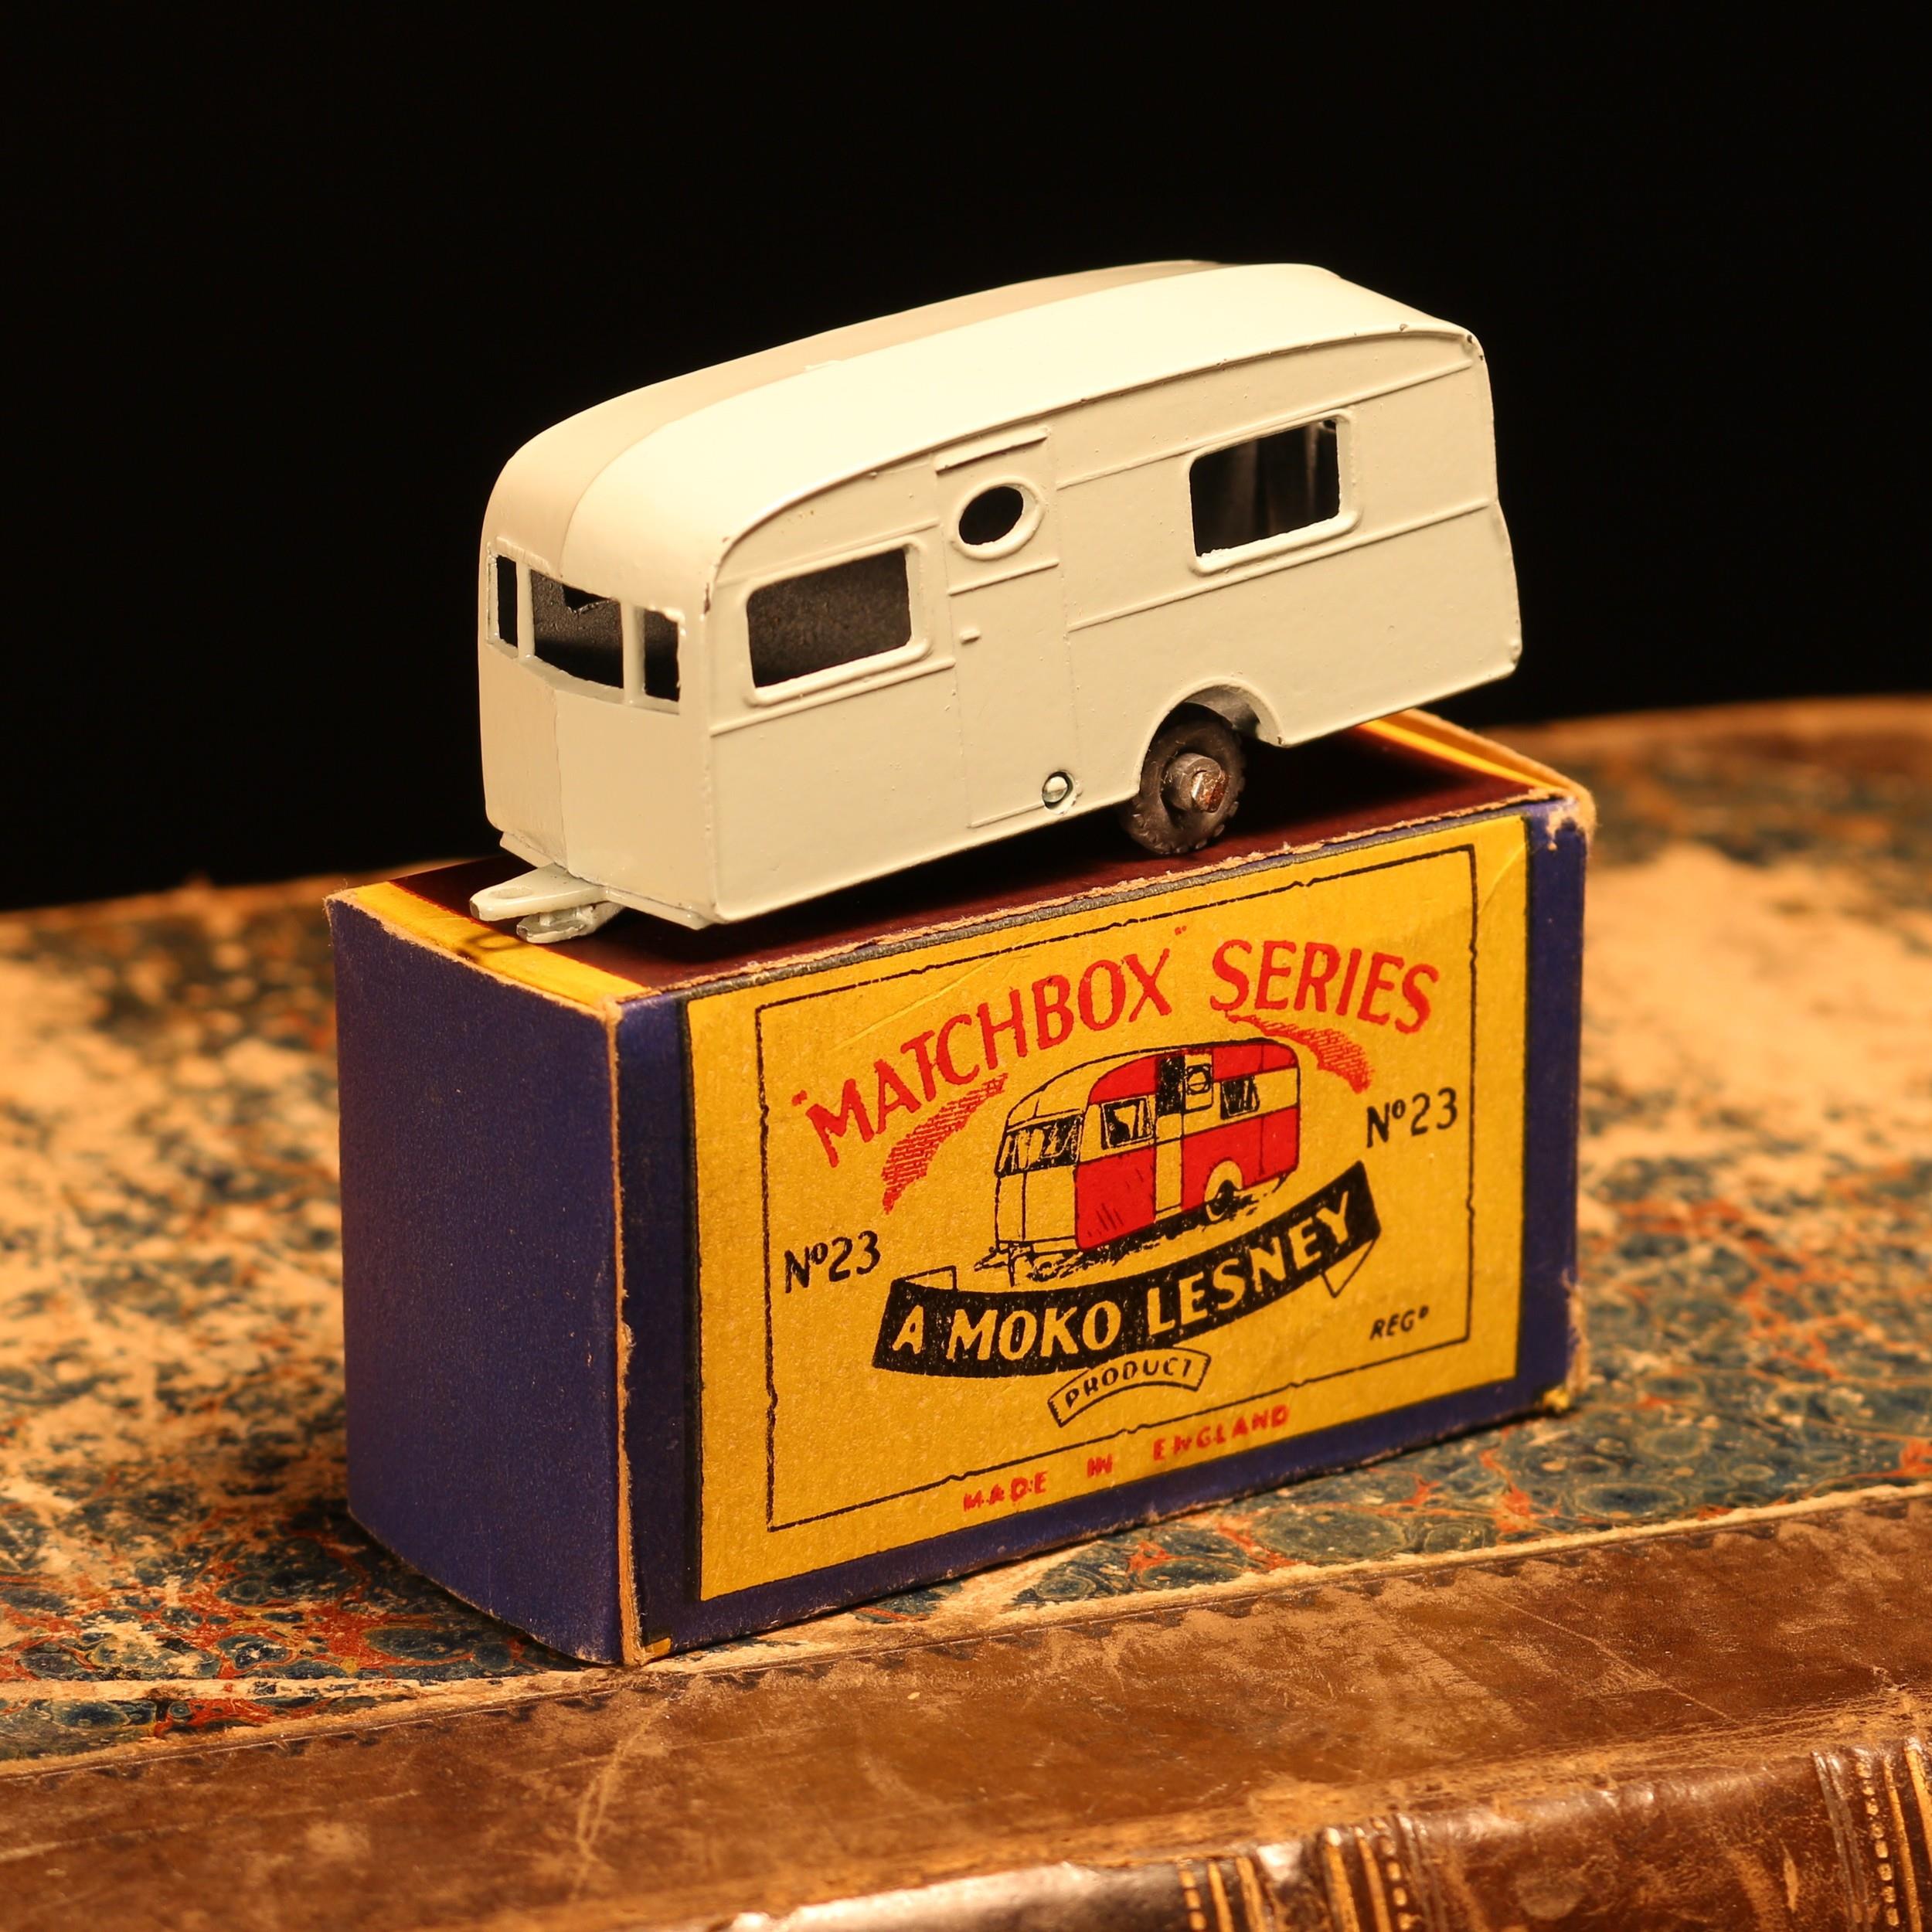 Matchbox '1-75' series diecast model 23b Berkeley Cavalier caravan, pale blue body with 'ON TOW